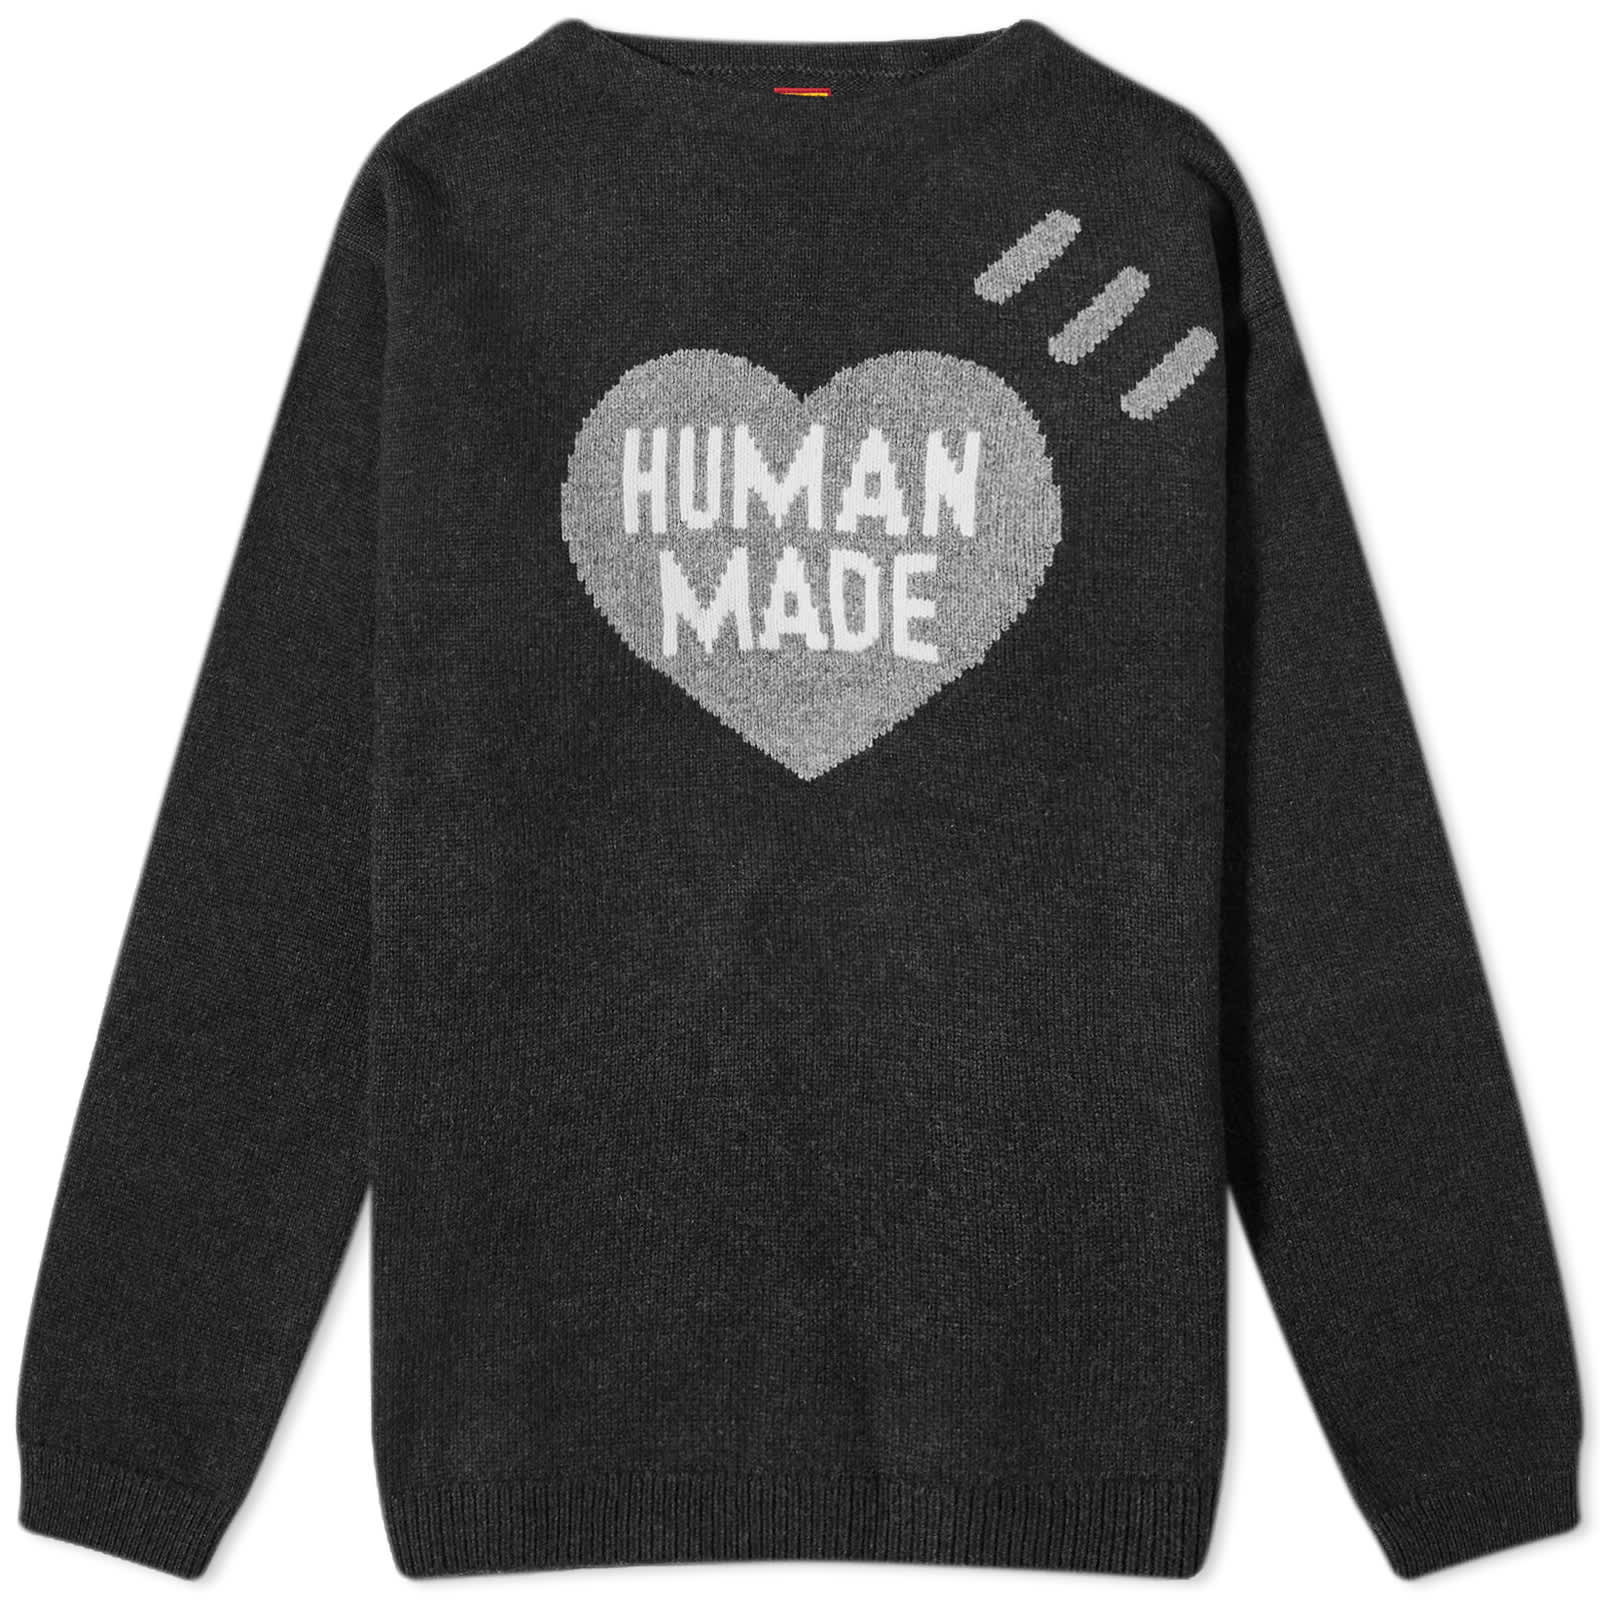 Свитер Human Made Heart Knit, черный свитер human made heart knit бежевый